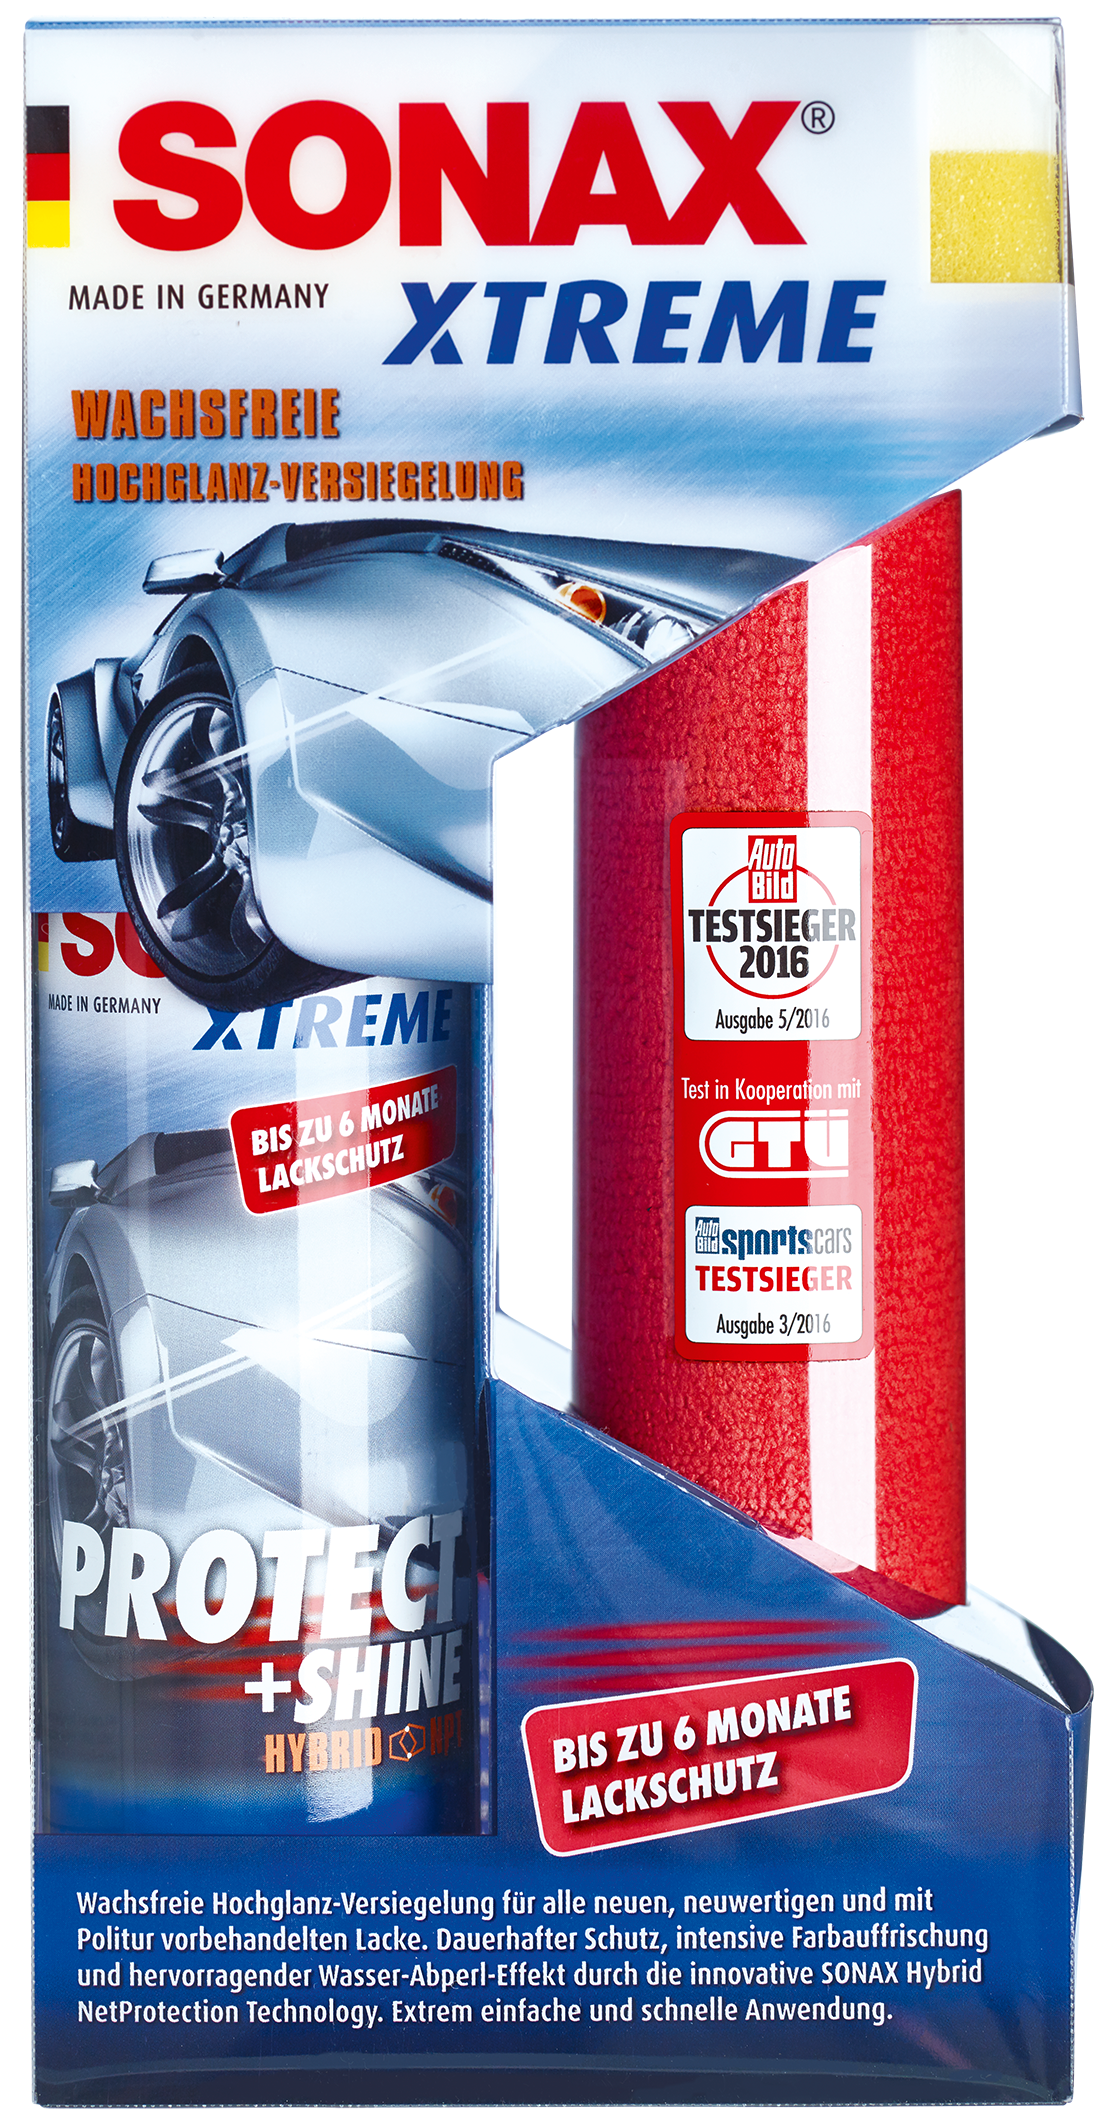 Sonax 02221000 Xtreme Protect+Shine Hybrid NPT 210ml